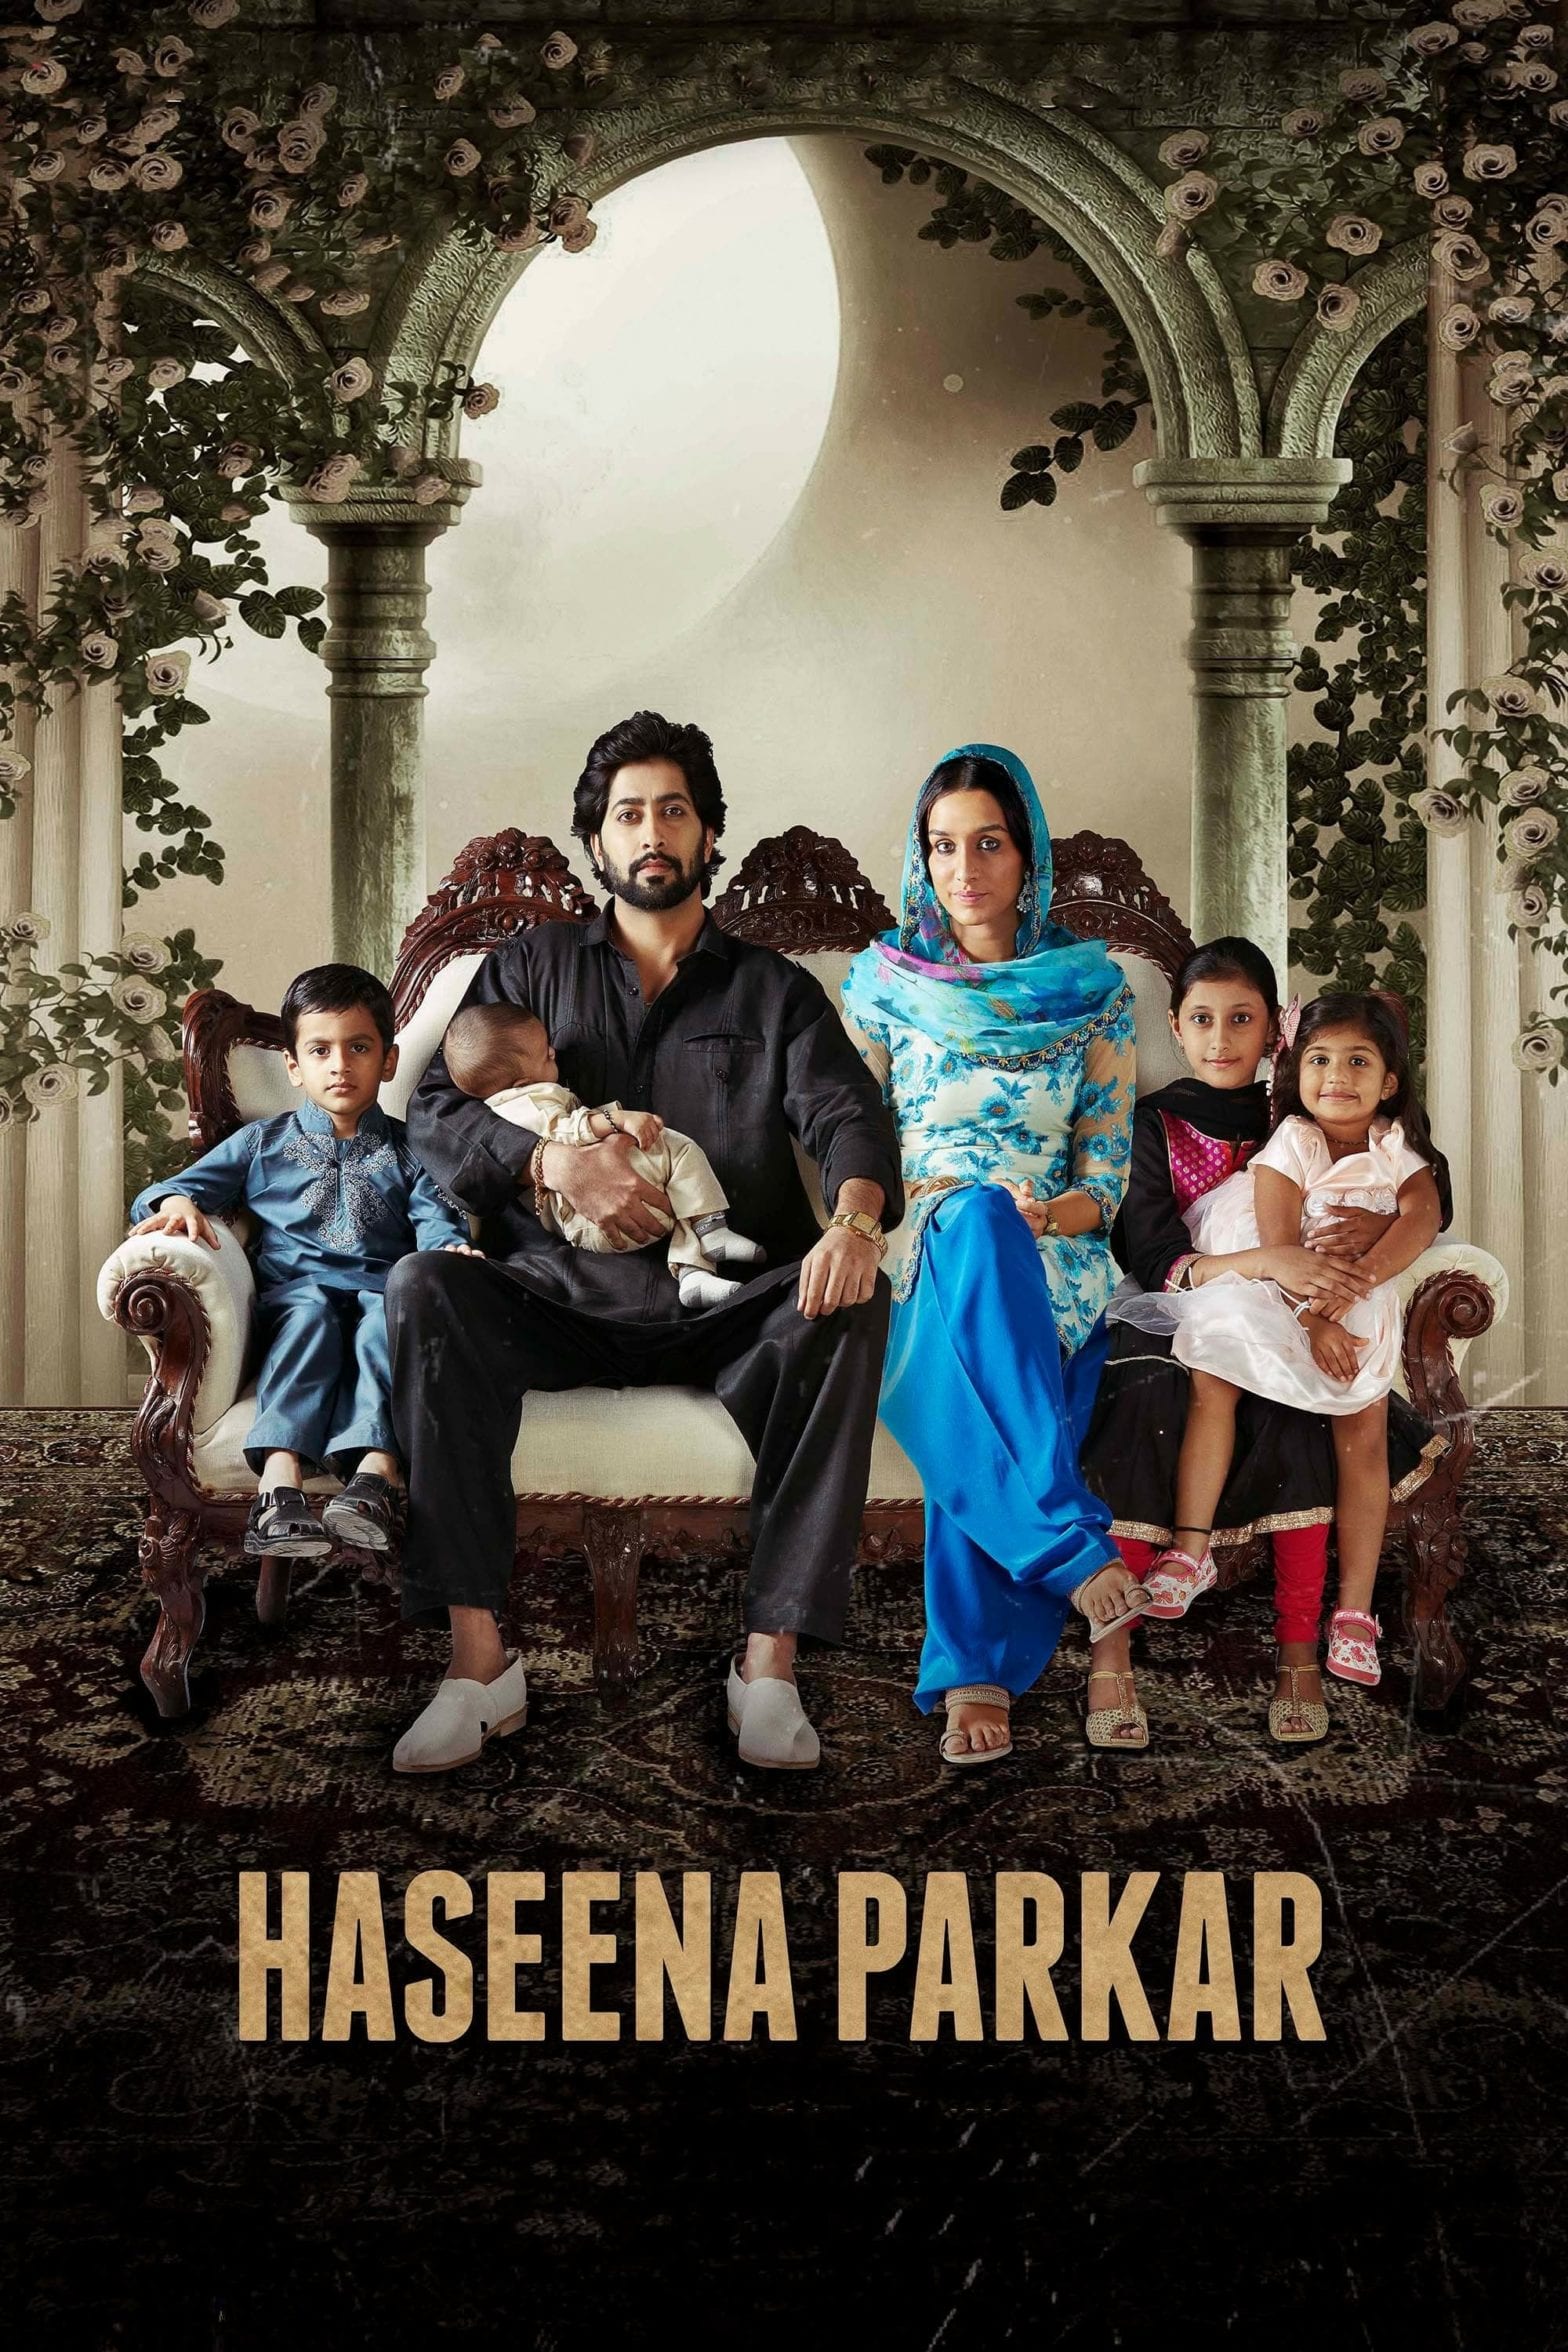 Poster for the movie "Haseena Parkar"